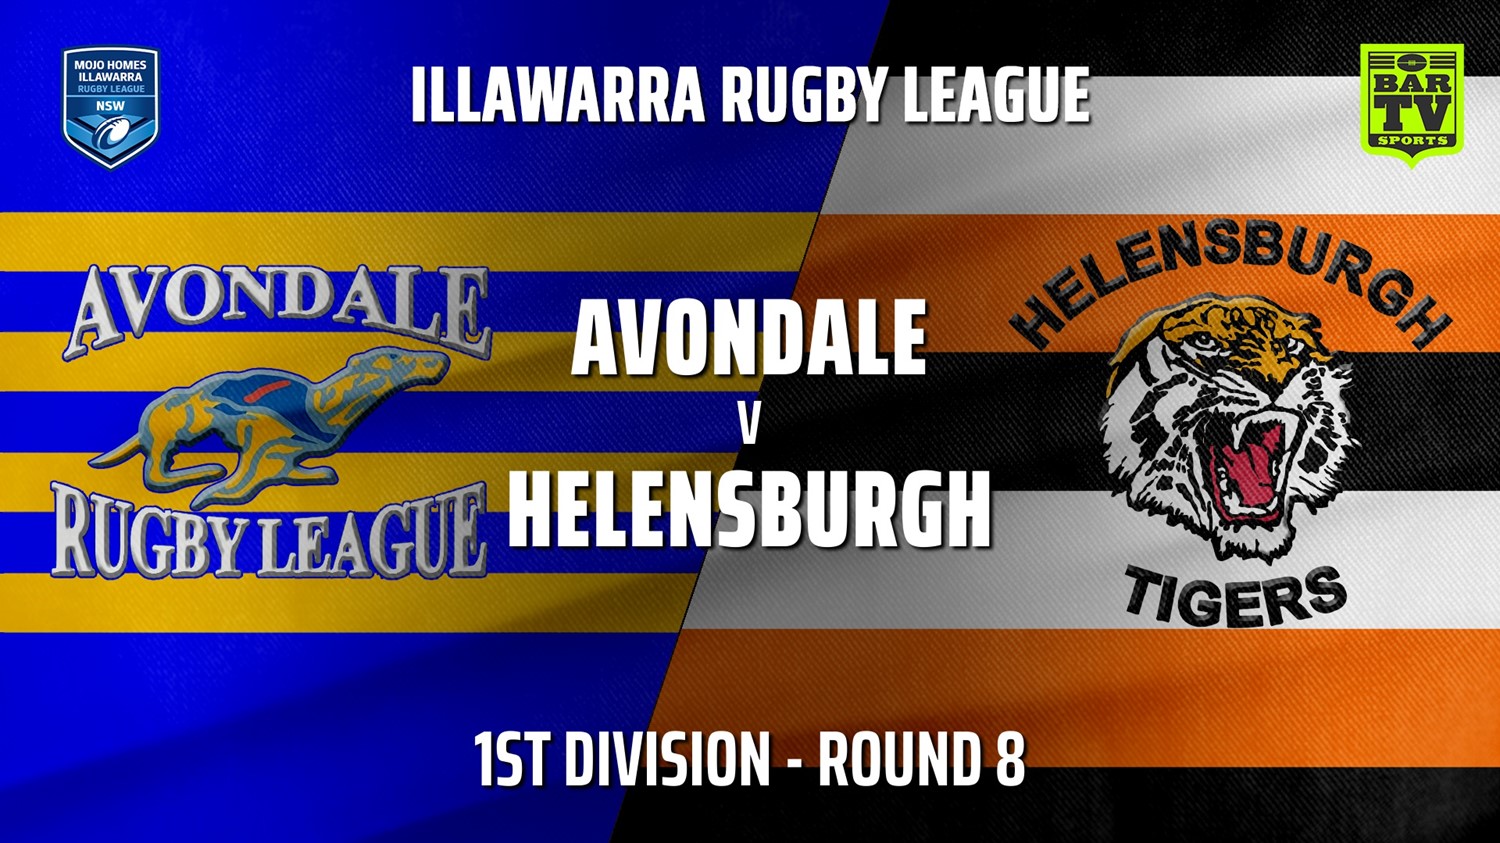 210605-IRL Round 8 - 1st Division - Avondale RLFC v Helensburgh Tigers Slate Image